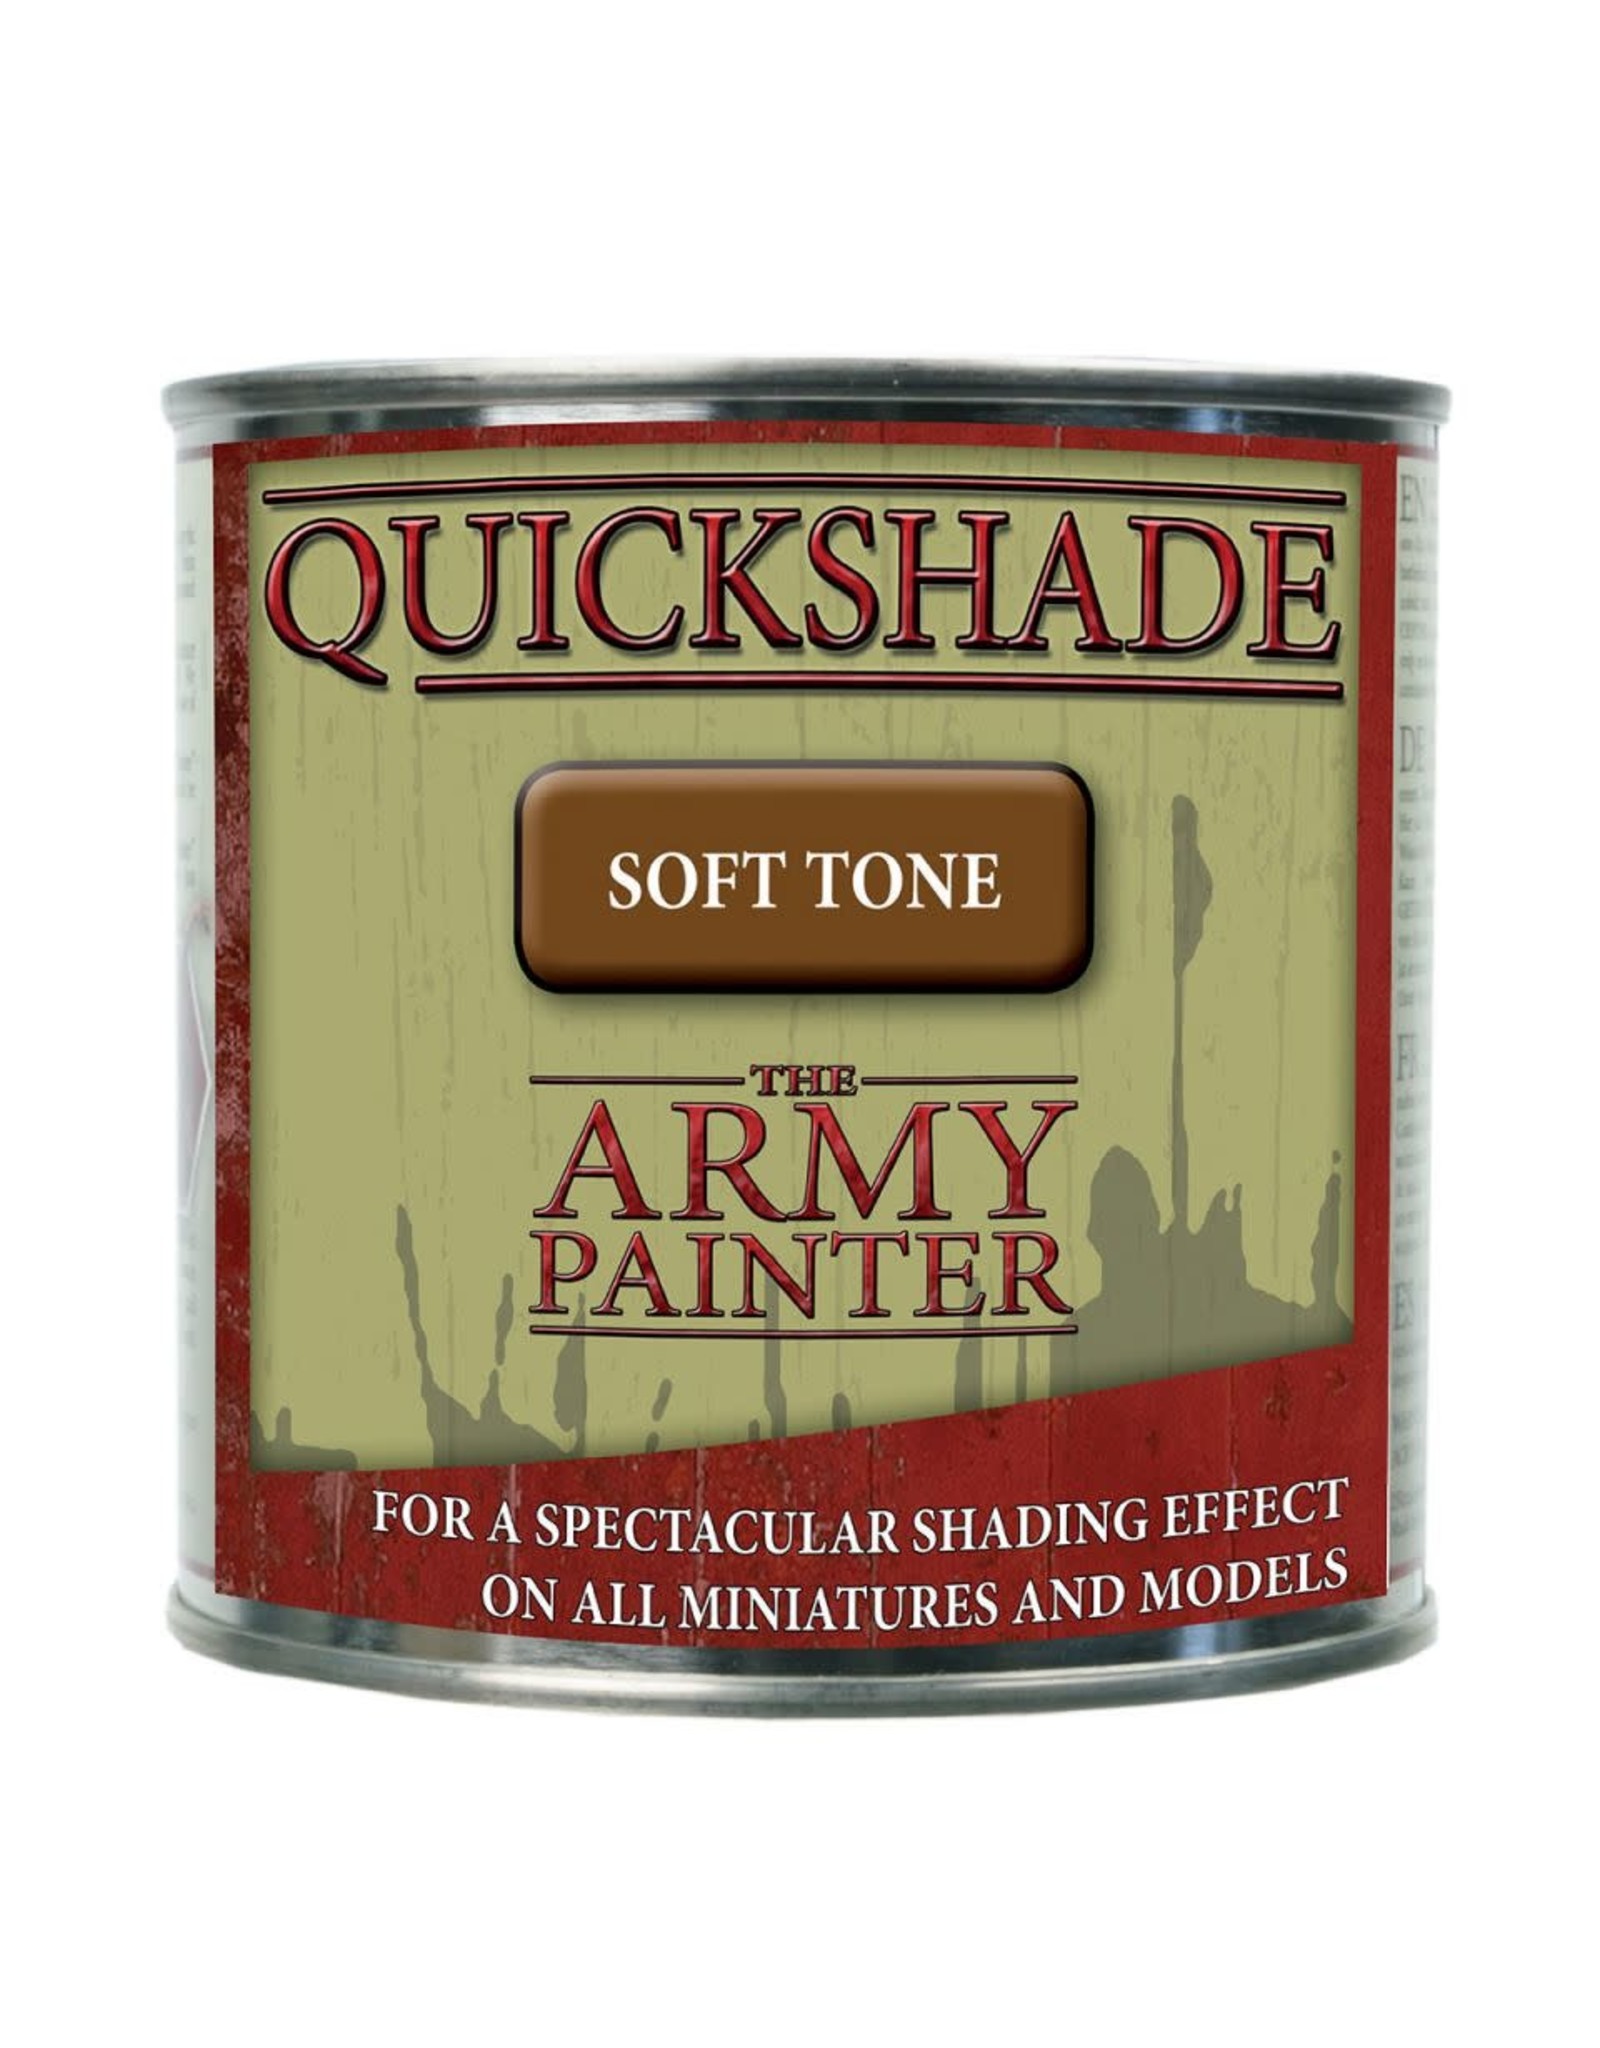 The Army Painter QS1001 Quickshade Soft Tone